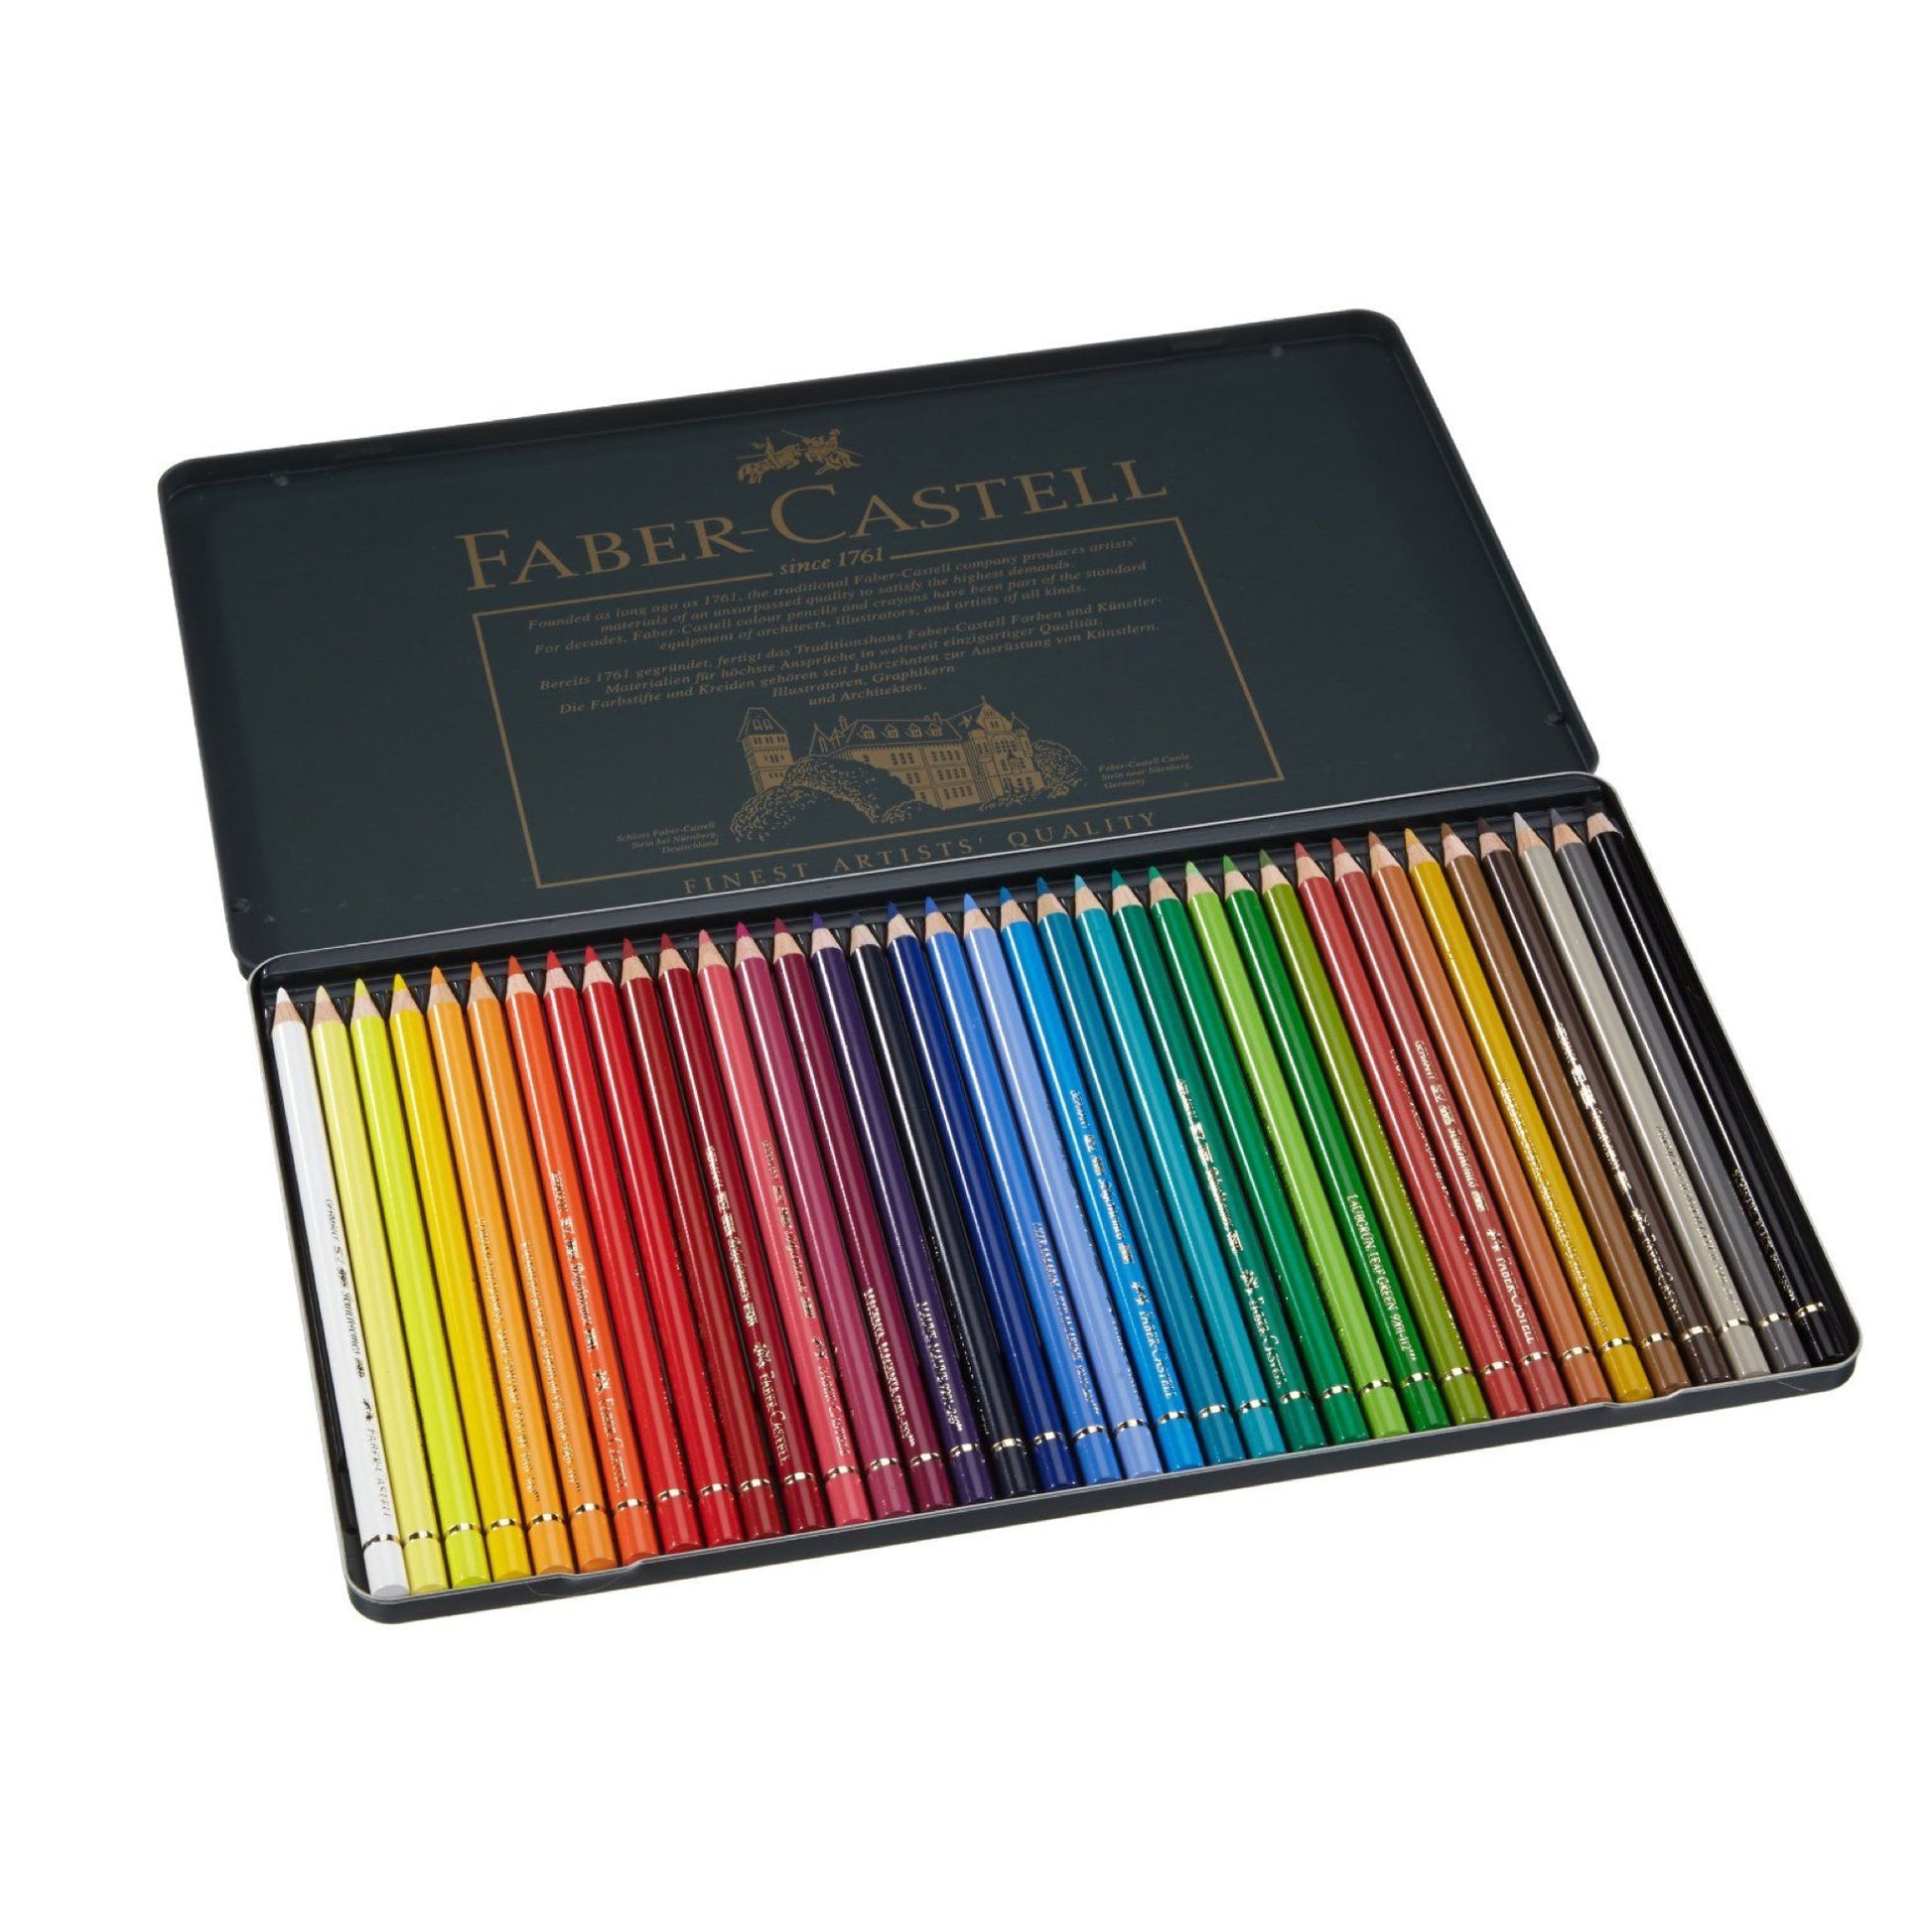 Faber Castell Polychromos Colour Pencils 36 Colors || الوان خشبيه فيبر كاستل بوليكروموس 36 لون